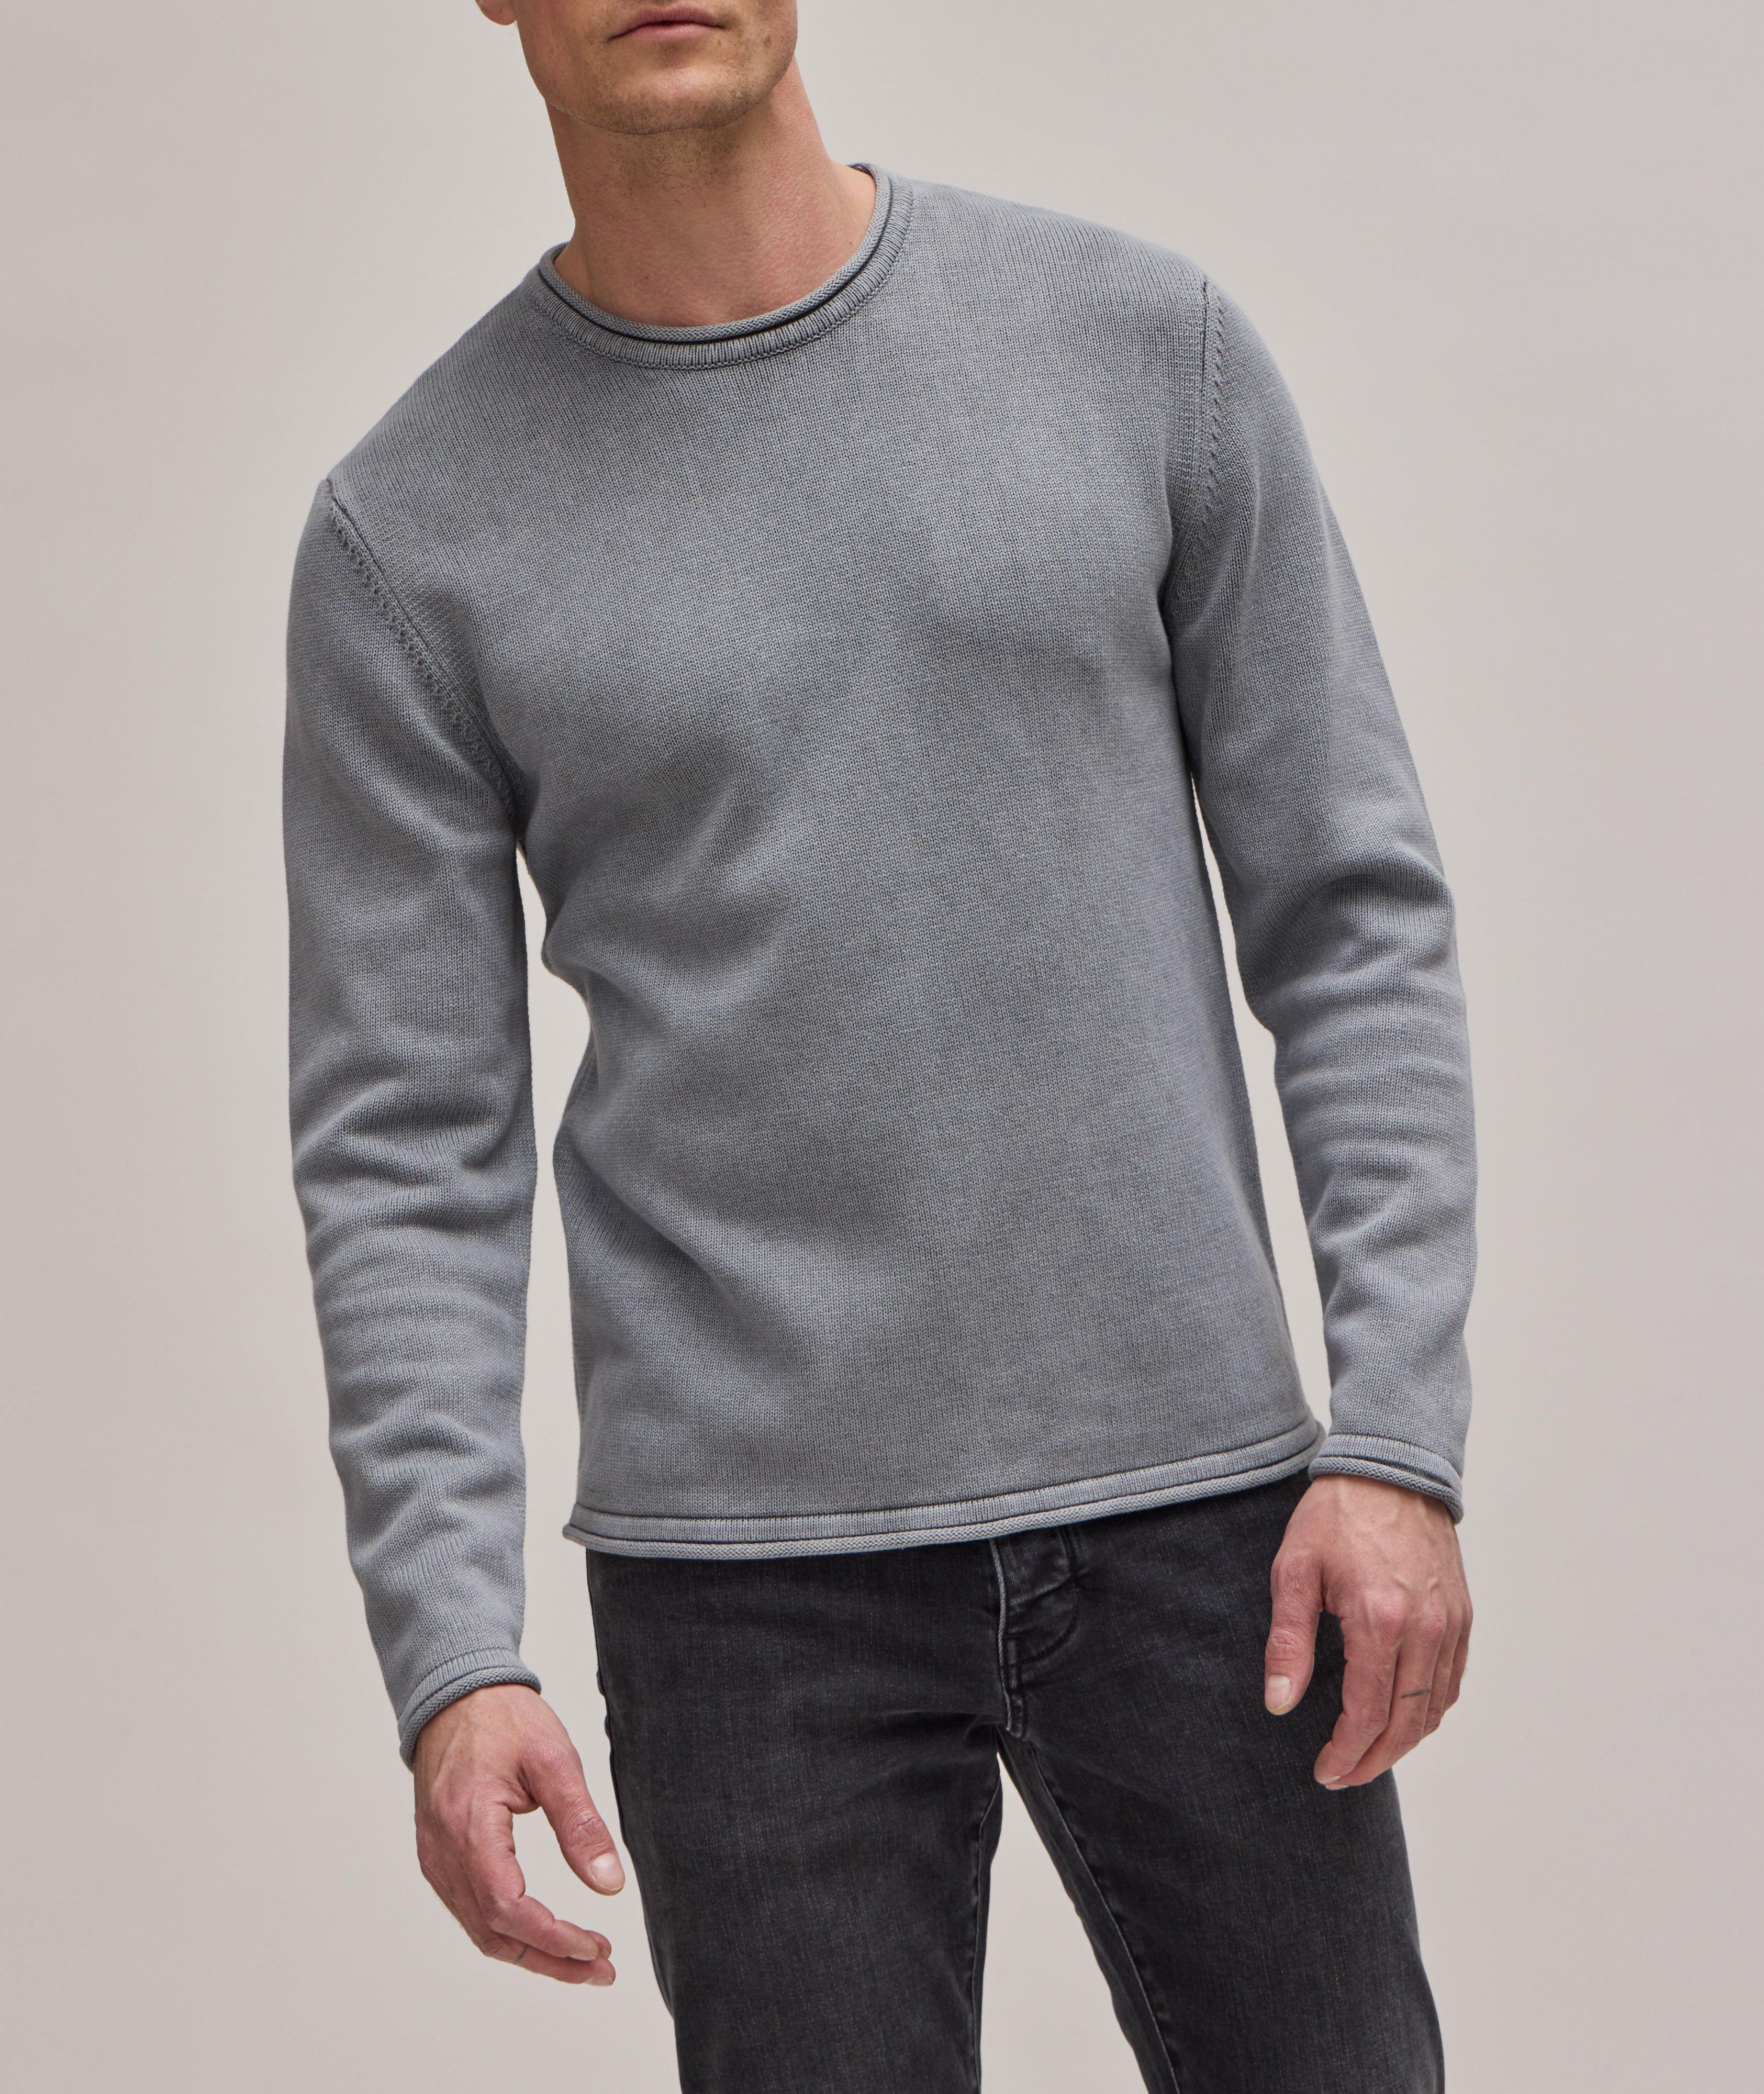 Rolled Collar Crewneck Sweater image 1